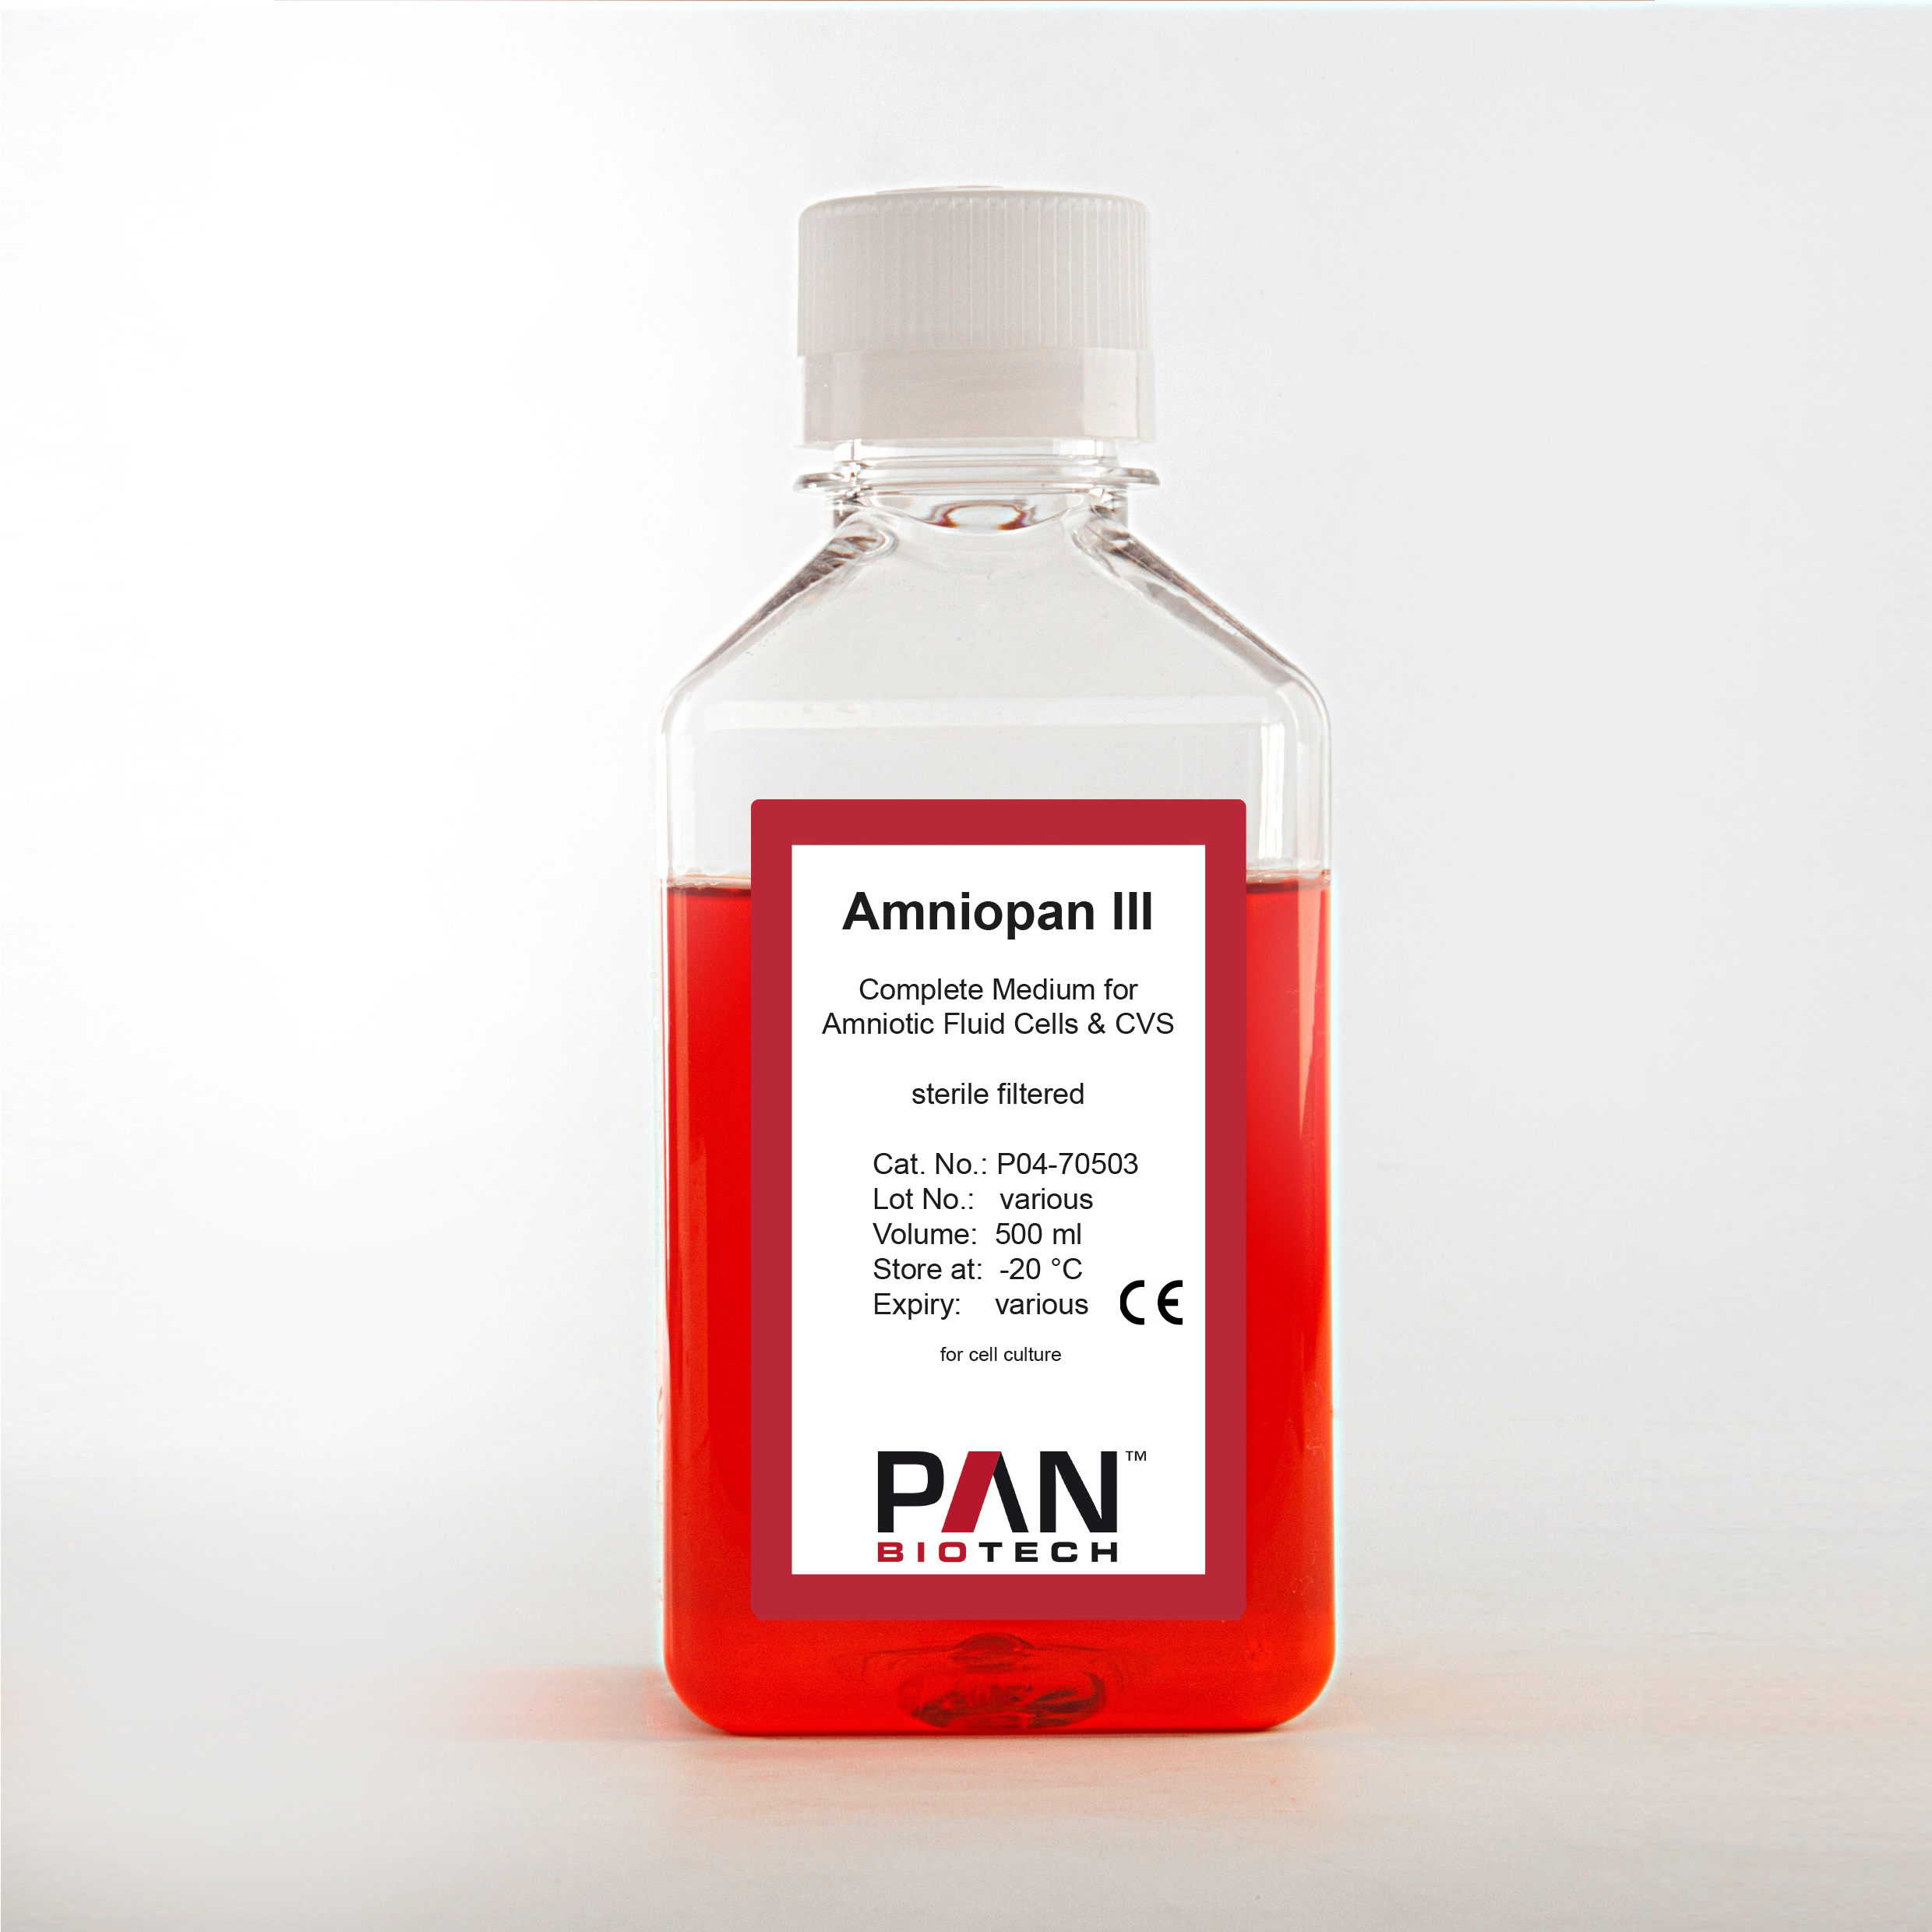 Amniopan III, Complete Medium for Amniotic Fluid Cells & CVS